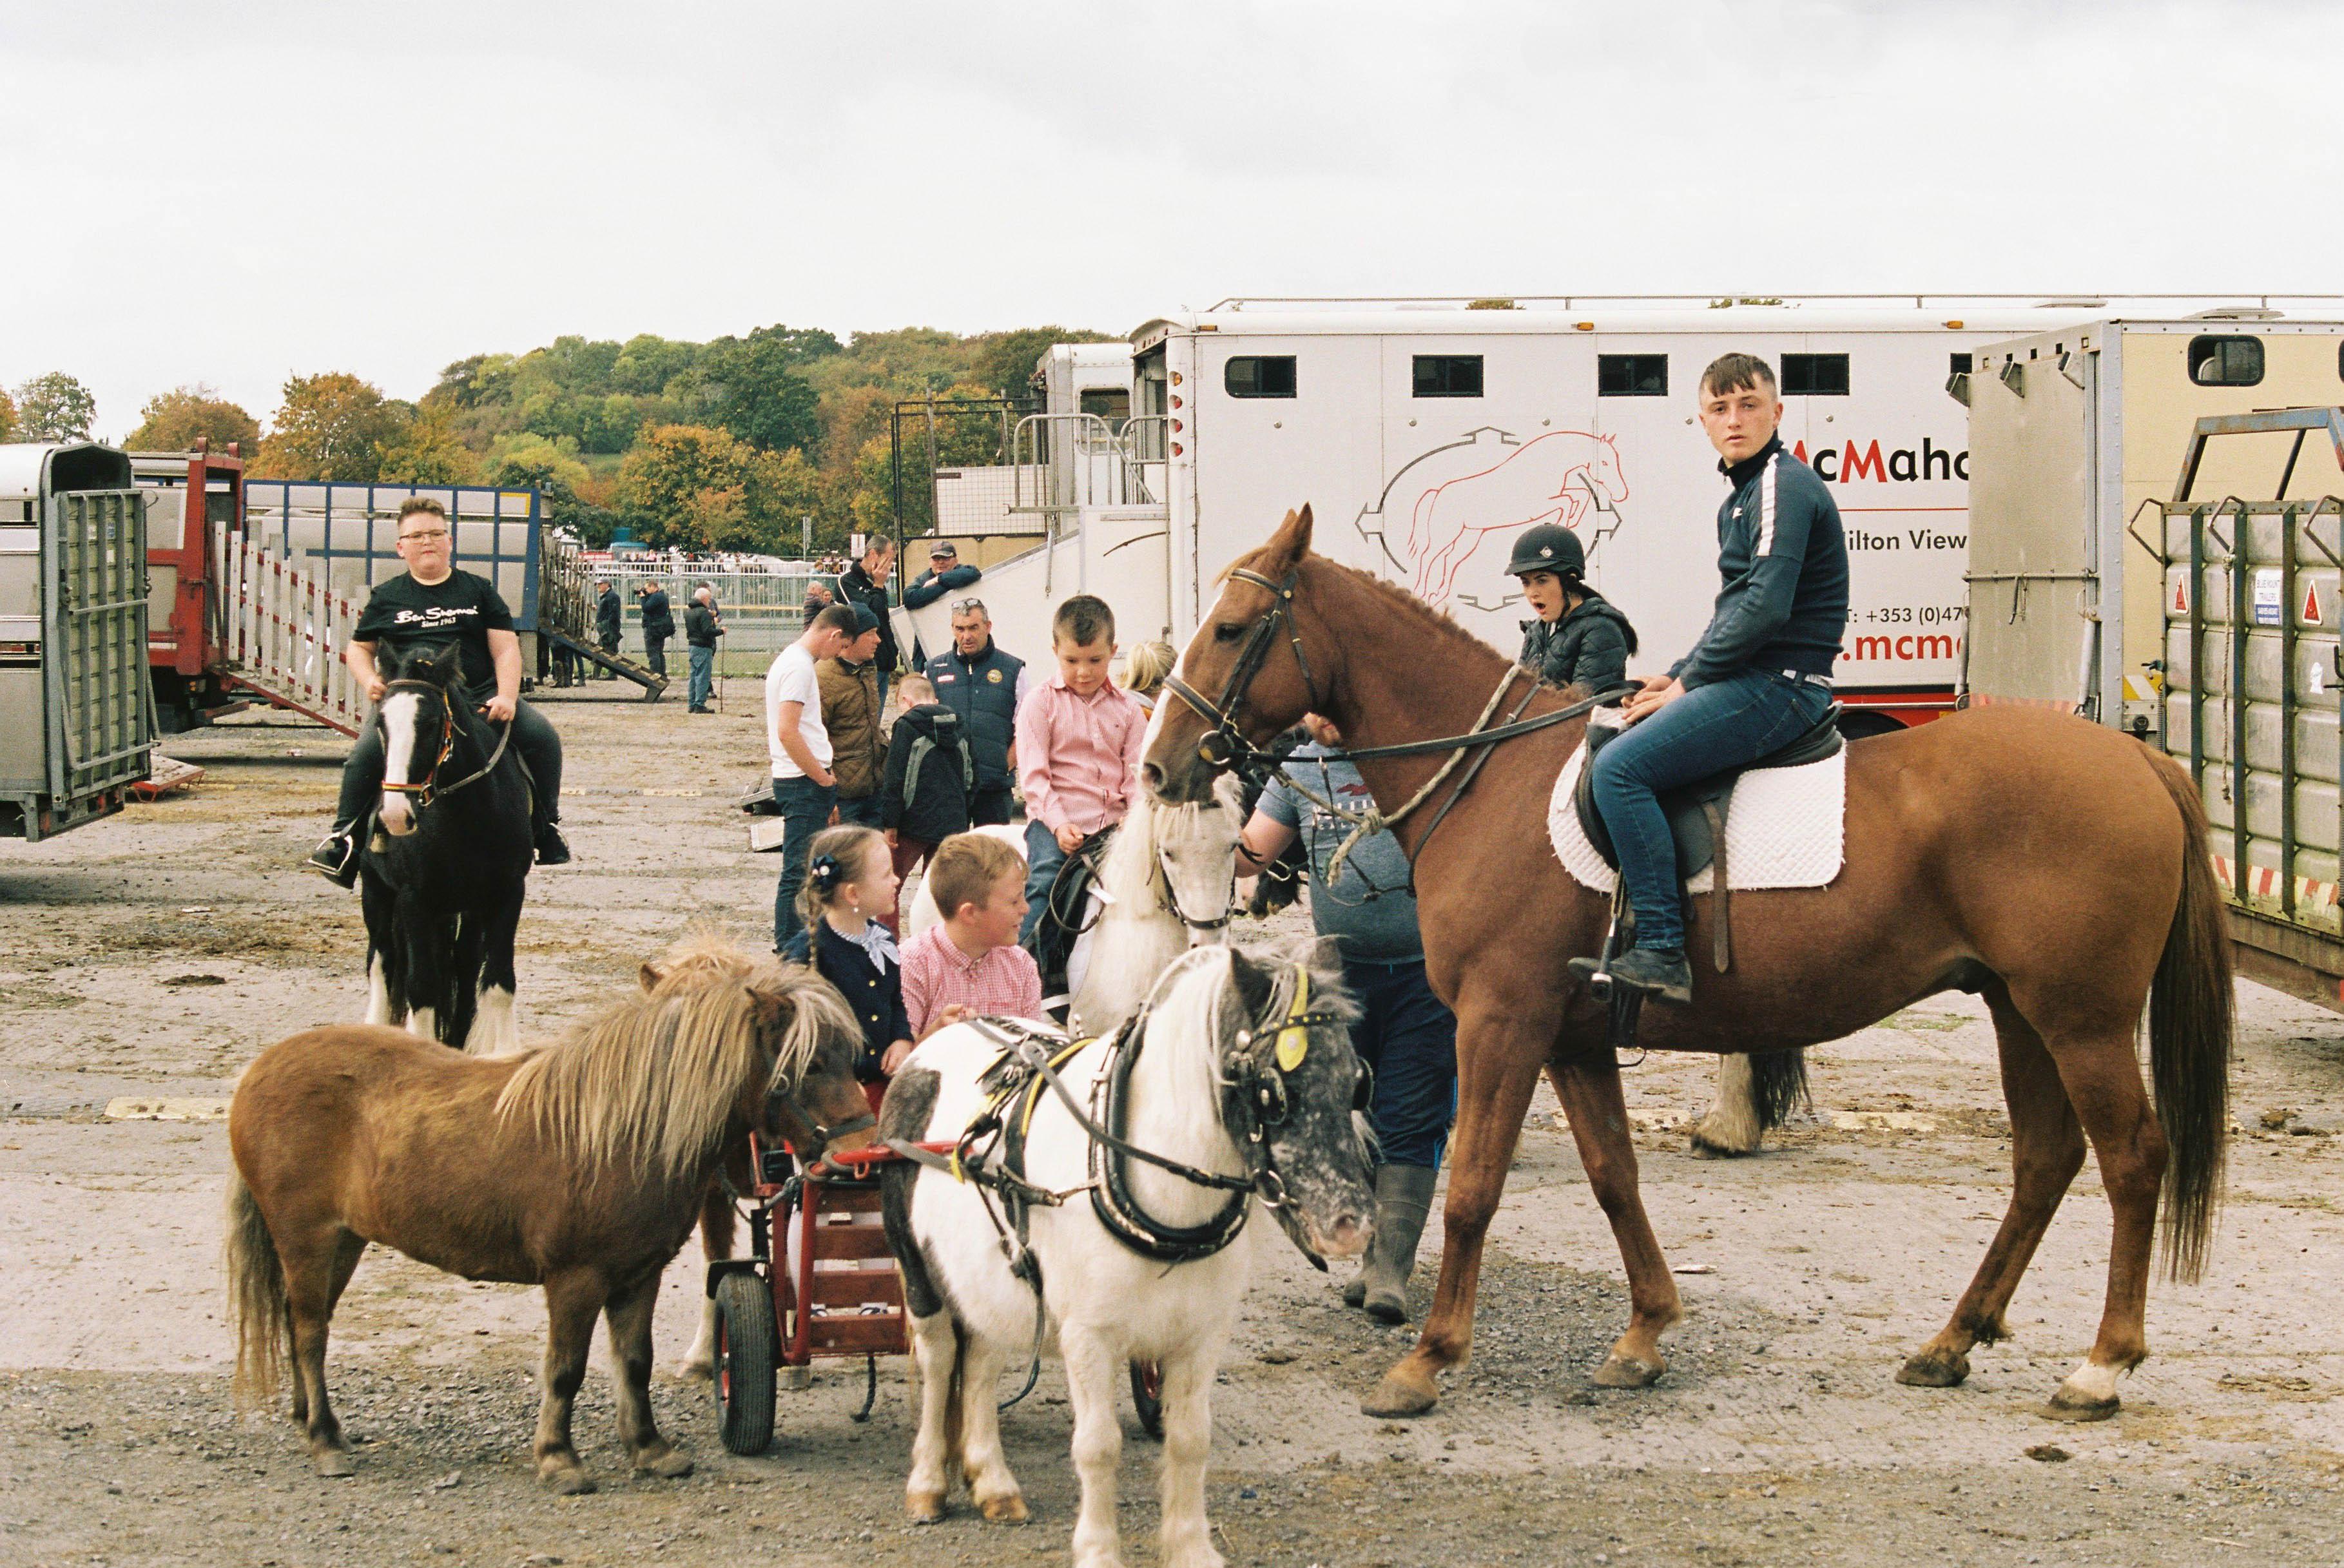 Marion Bergin Animal Print - Horse Crowd - Ballinasloe Horse Fair, Ireland, 2018